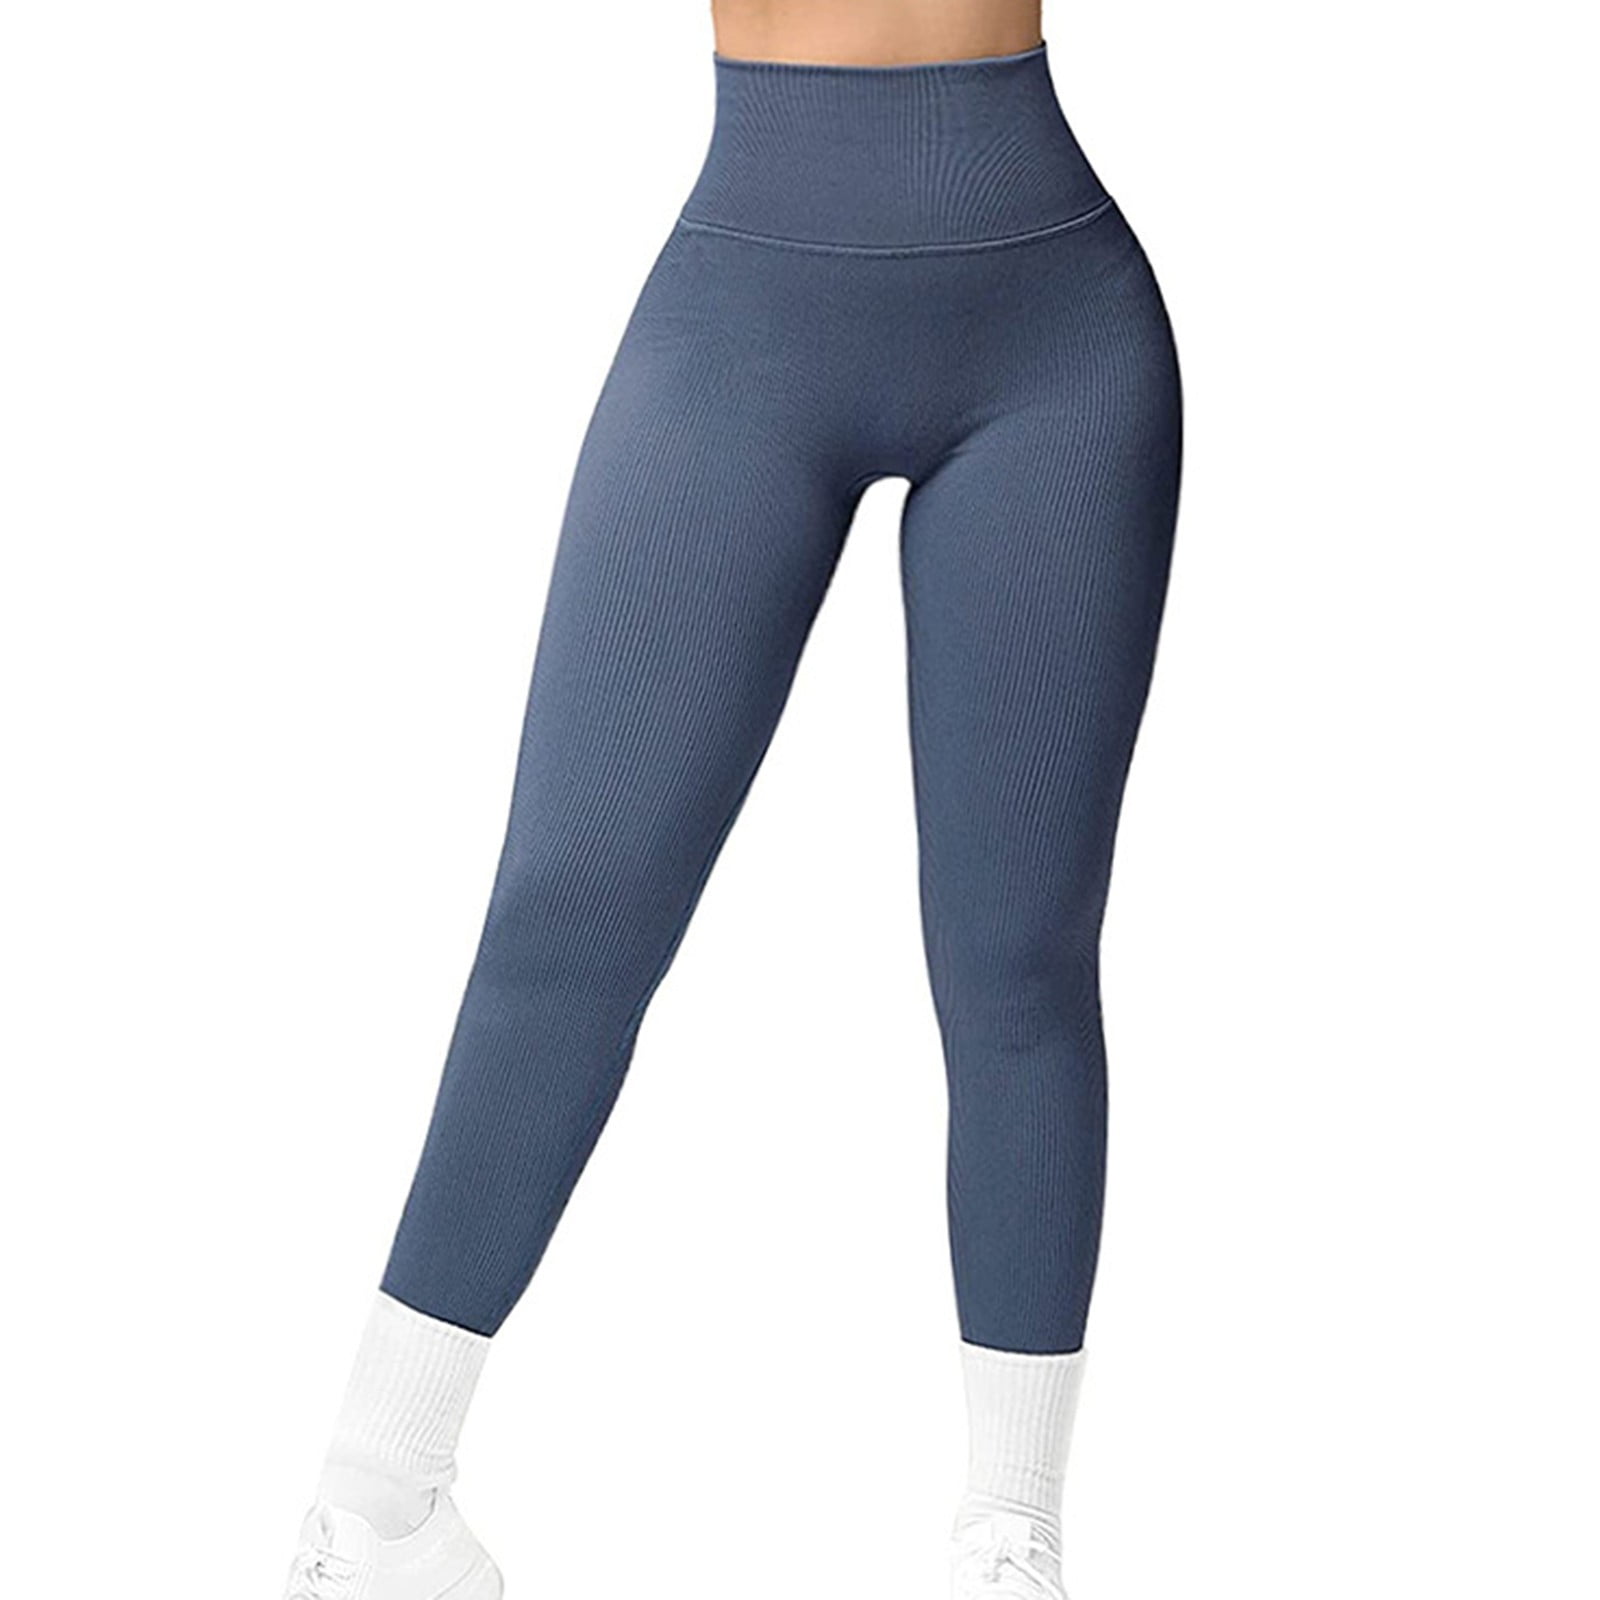 adviicd Yoga Pants For Girls Womens Yoga Pants Women's Yoga Pants with  Pockets - Leggings with Pockets, High Waist Tummy Control Non See-Through Workout  Pants Grey L 